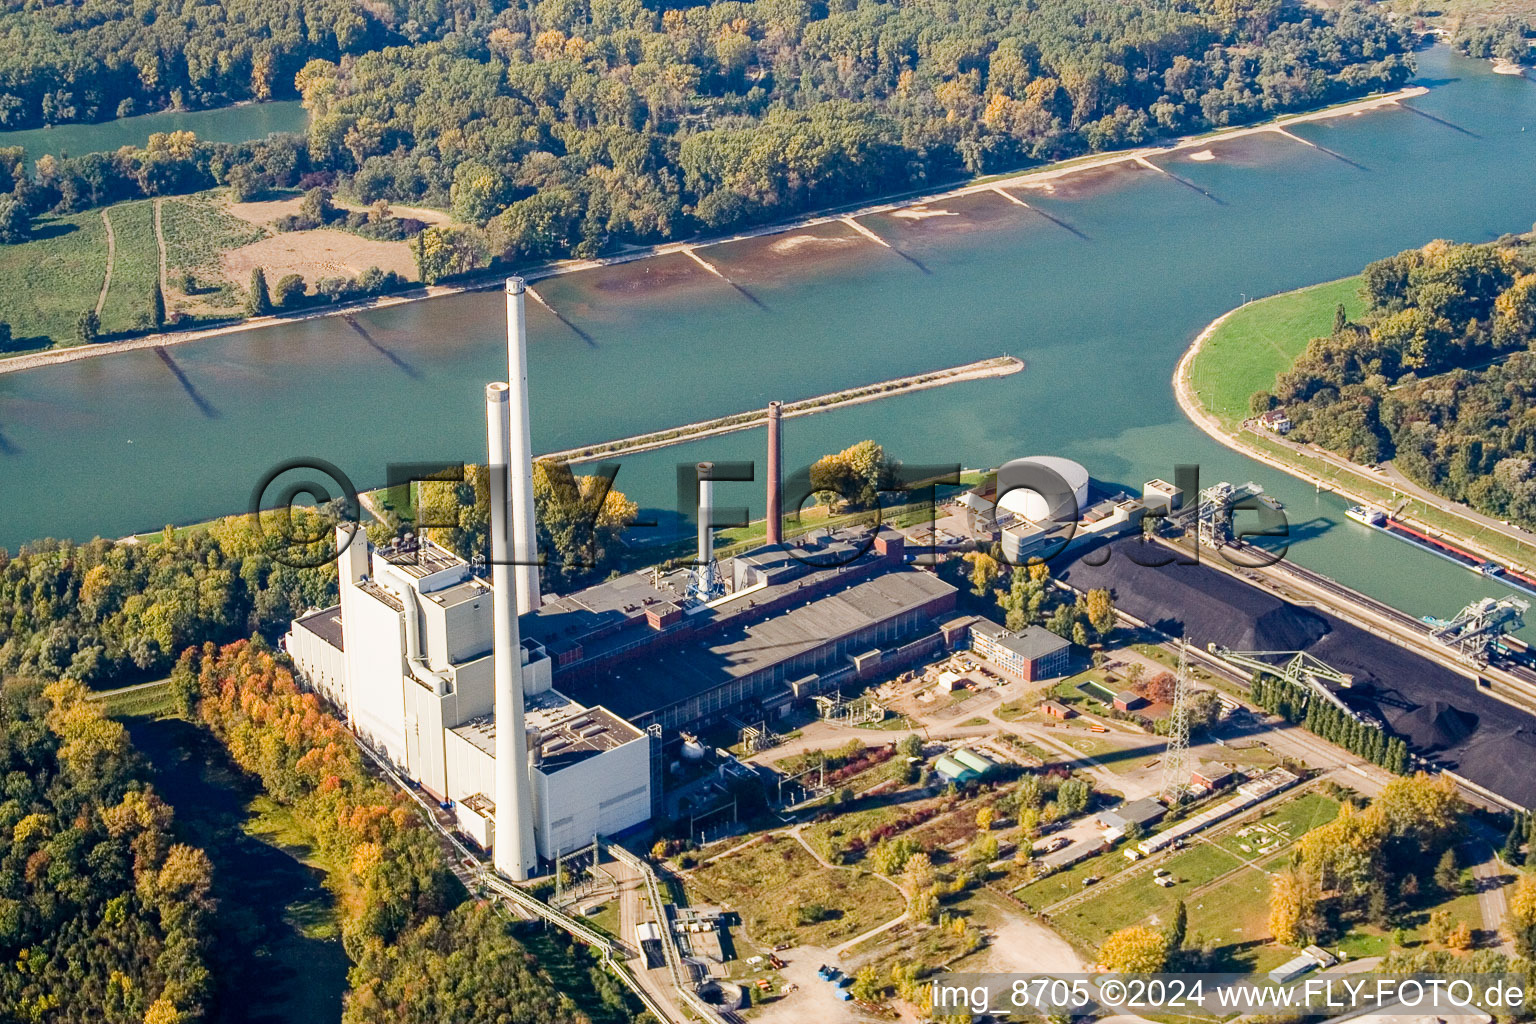 Aerial photograpy of Power plants and exhaust towers of coal power station EnBW Energie Baden-Wuerttemberg AG, Rheinhafen-Dampfkraftwerk Karlsruhe in the district Daxlanden in Karlsruhe in the state Baden-Wurttemberg, Germany